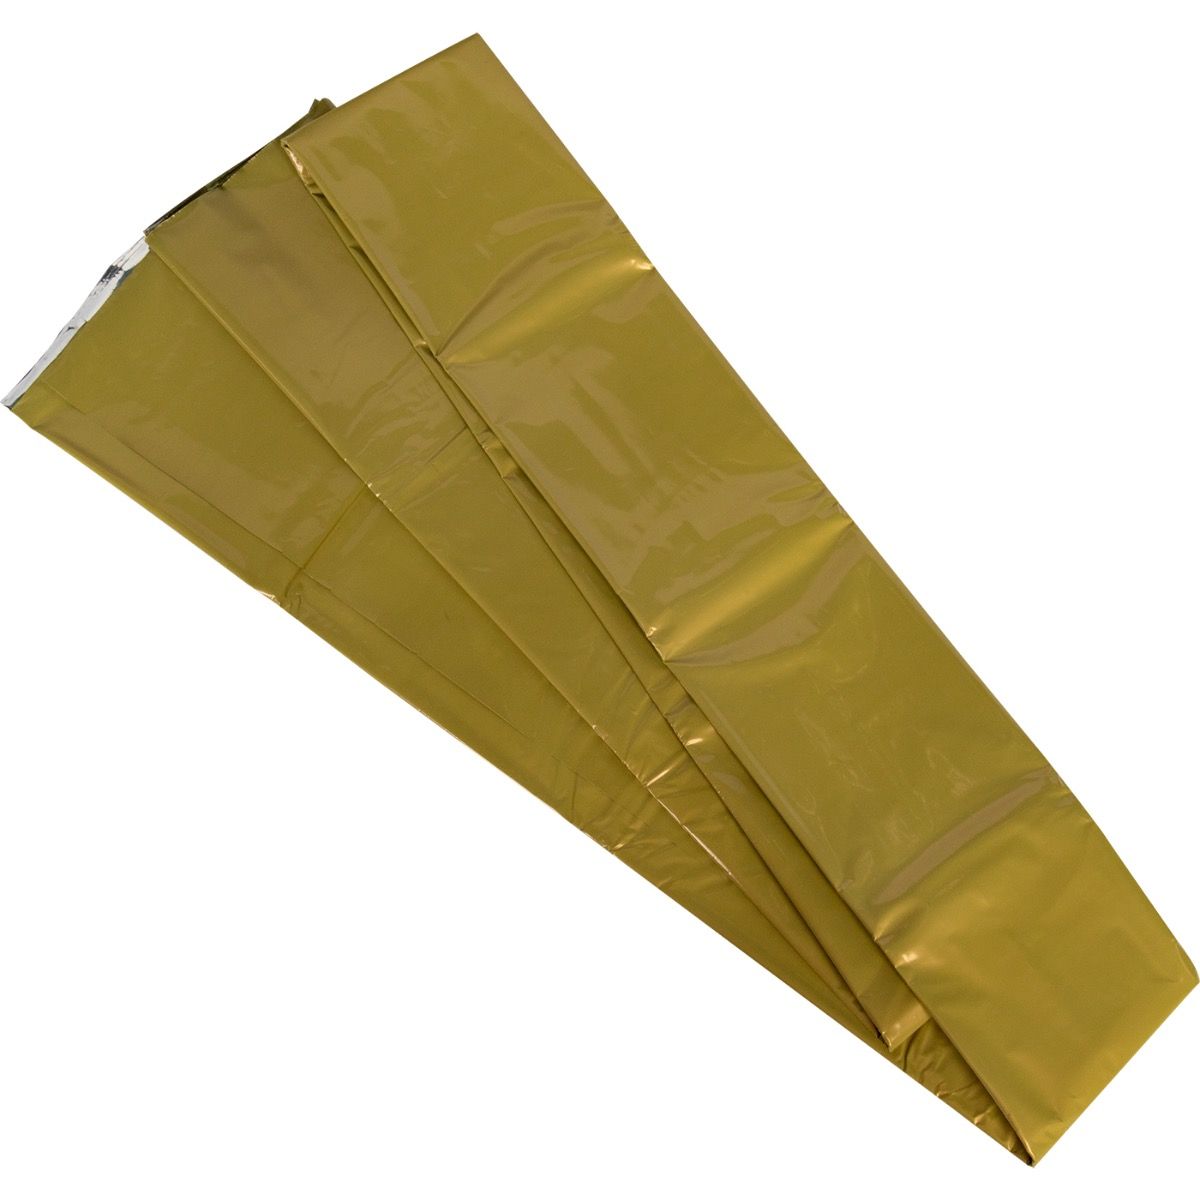 North American Rescue - Emergency Survival Wrap ,  Wrap Hypothermian 60 x 96 [ Green ]